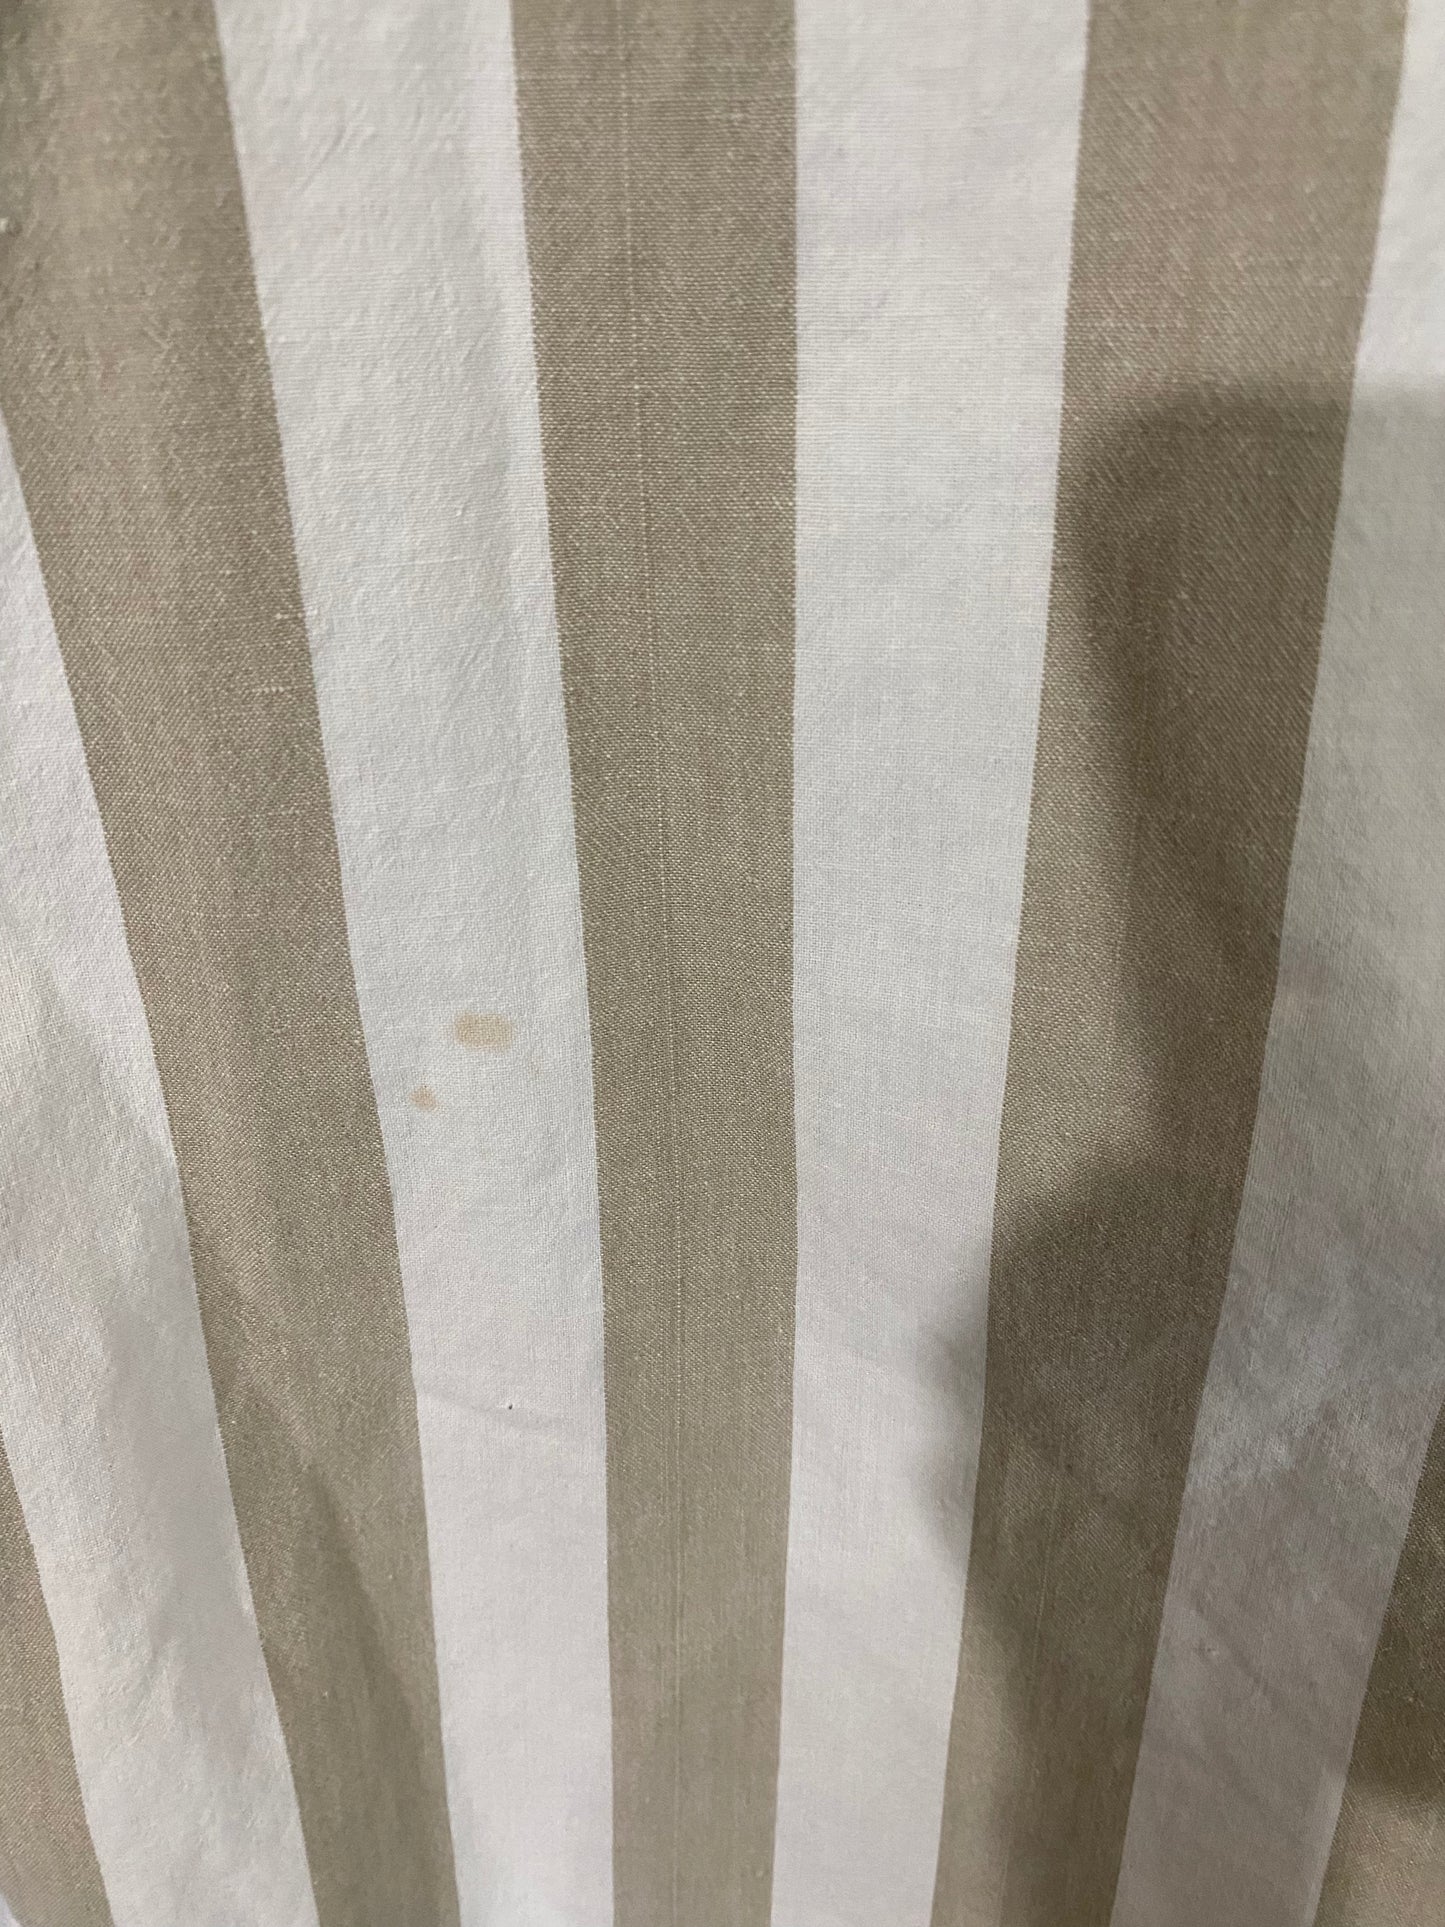 Tan/white Striped Jumpsuit